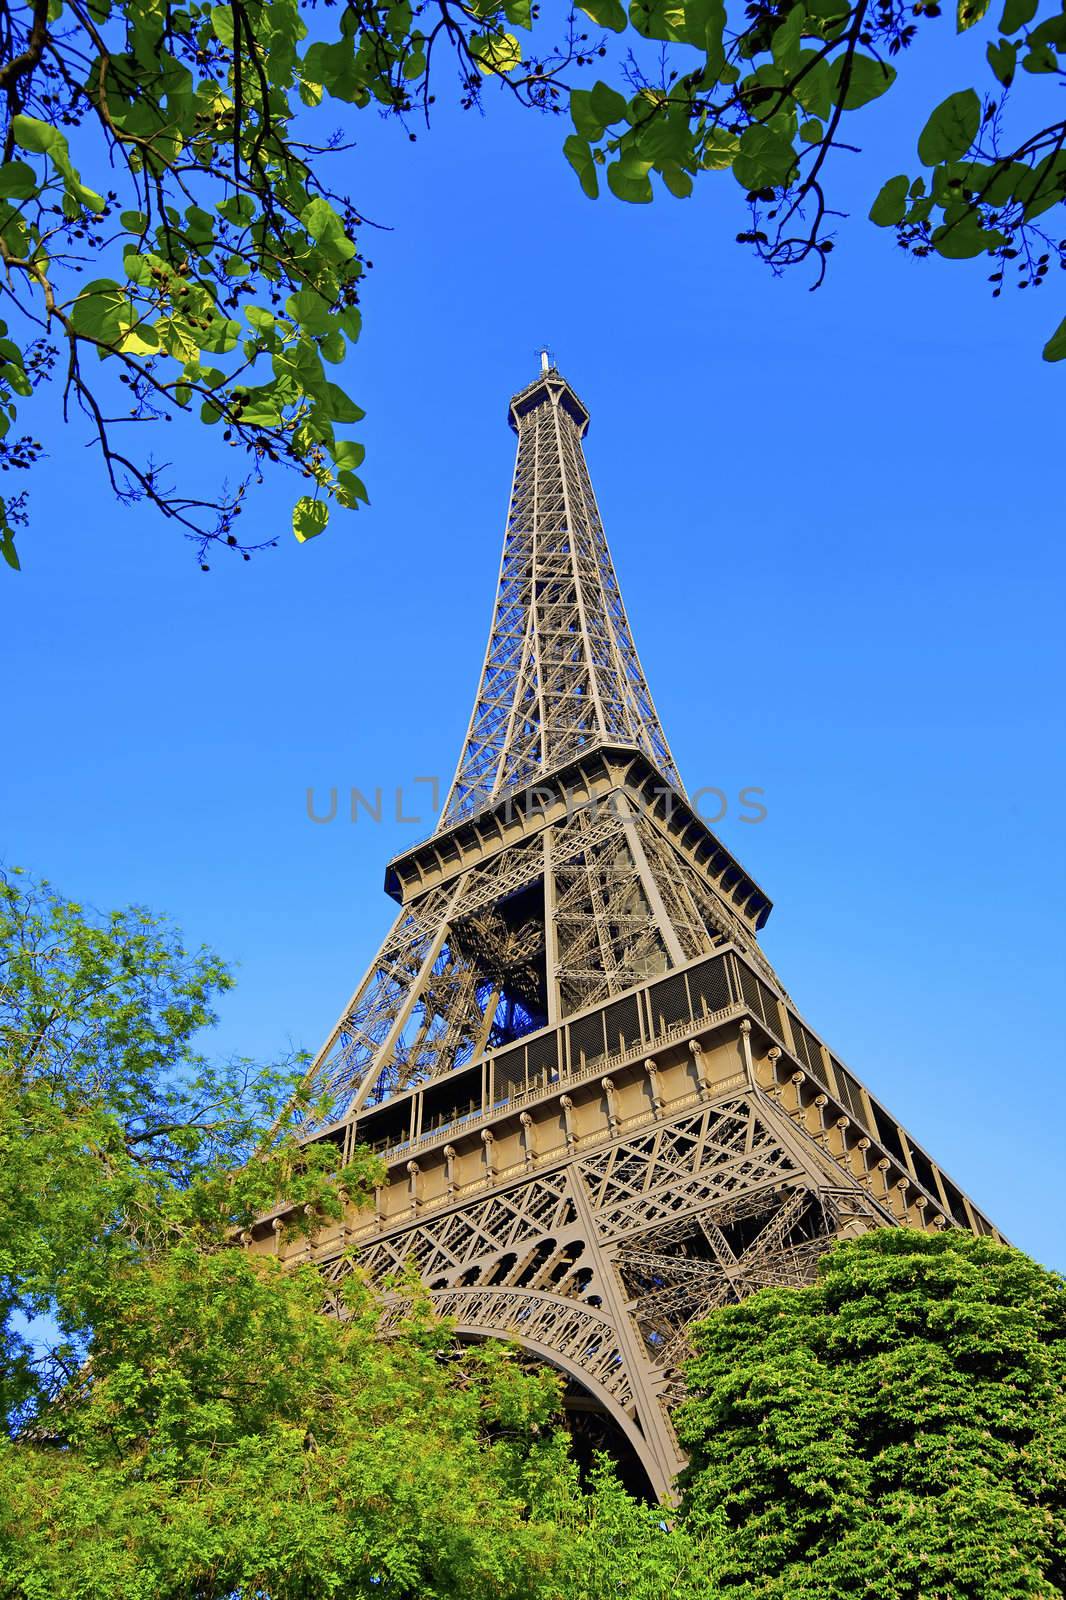 Eiffel tower by kjorgen